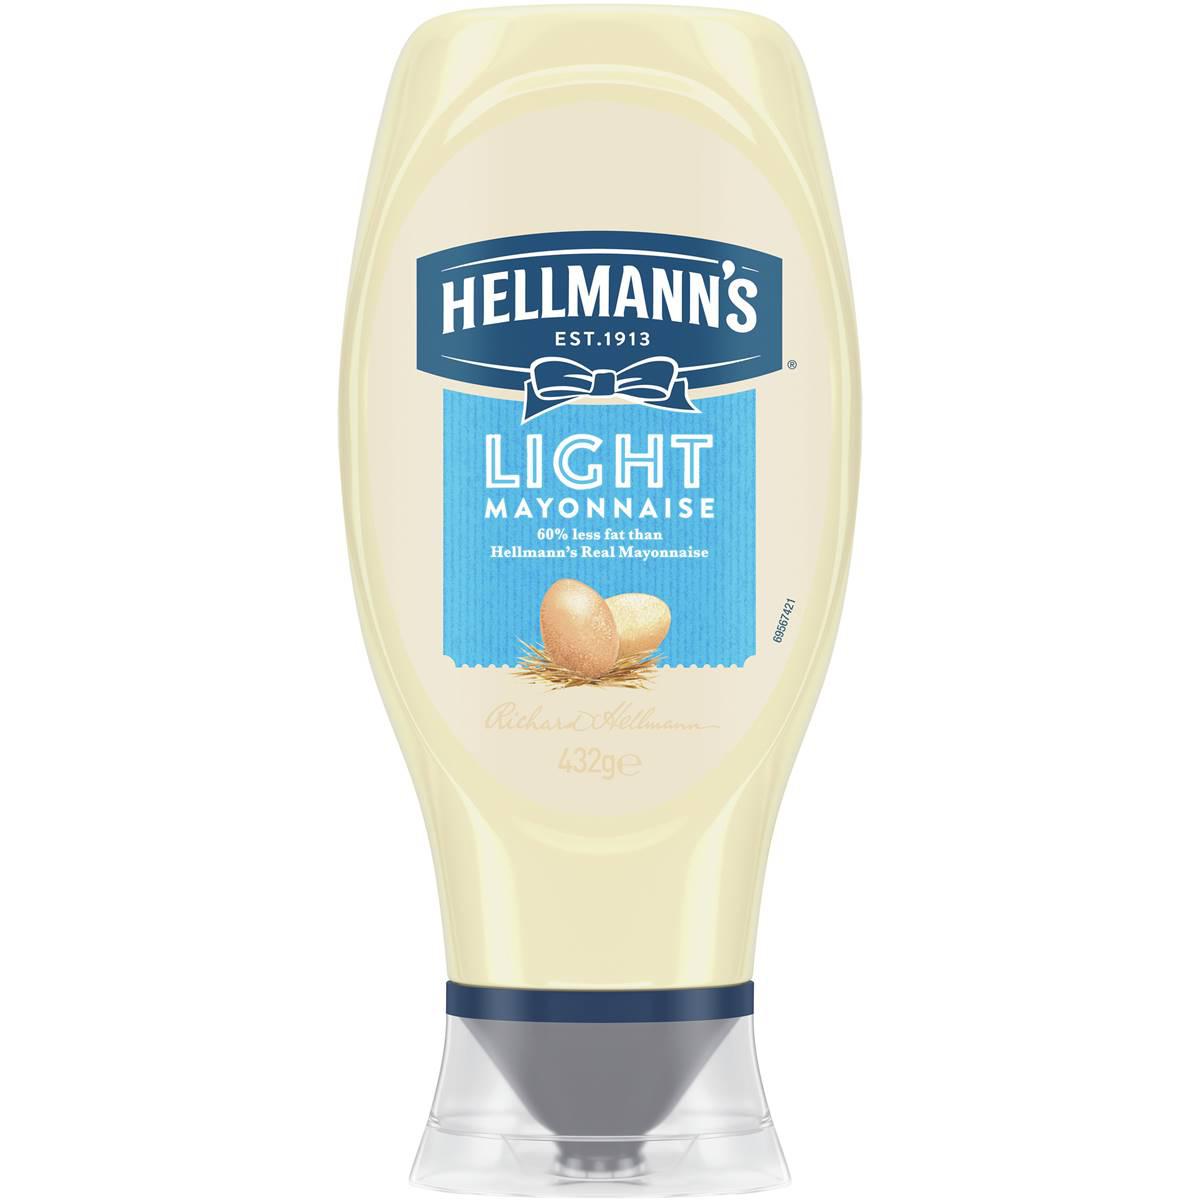 Hellmann's Light Mayo Squeeze Bottle 432g